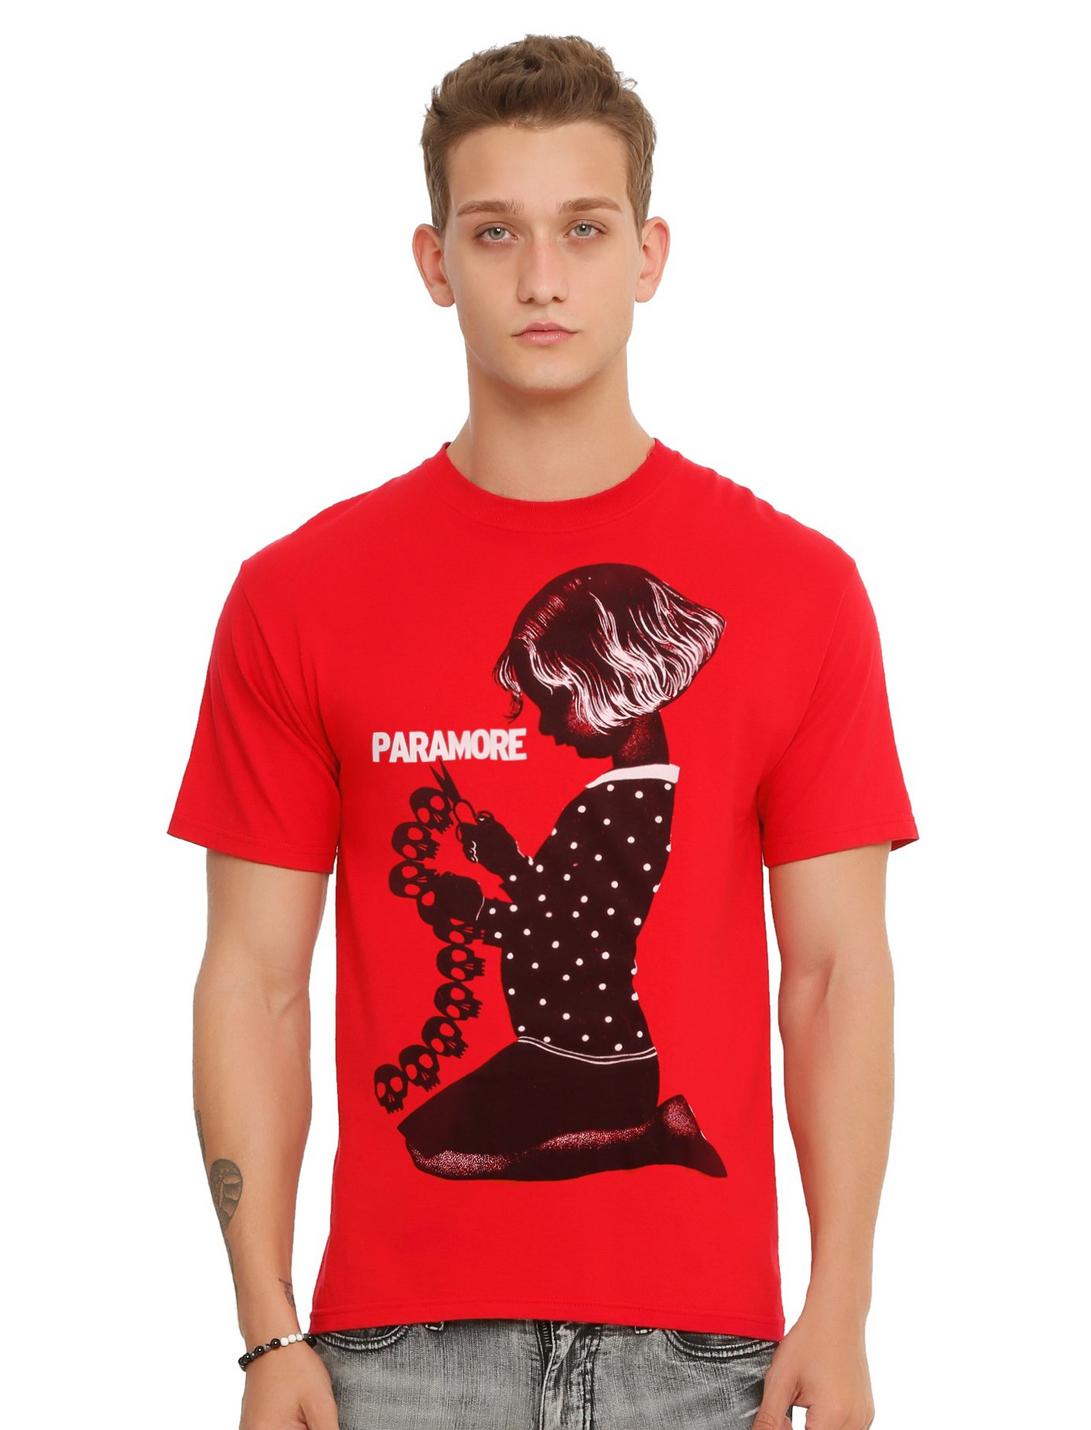 Paramore Scissors T-Shirt, RED, hi-res